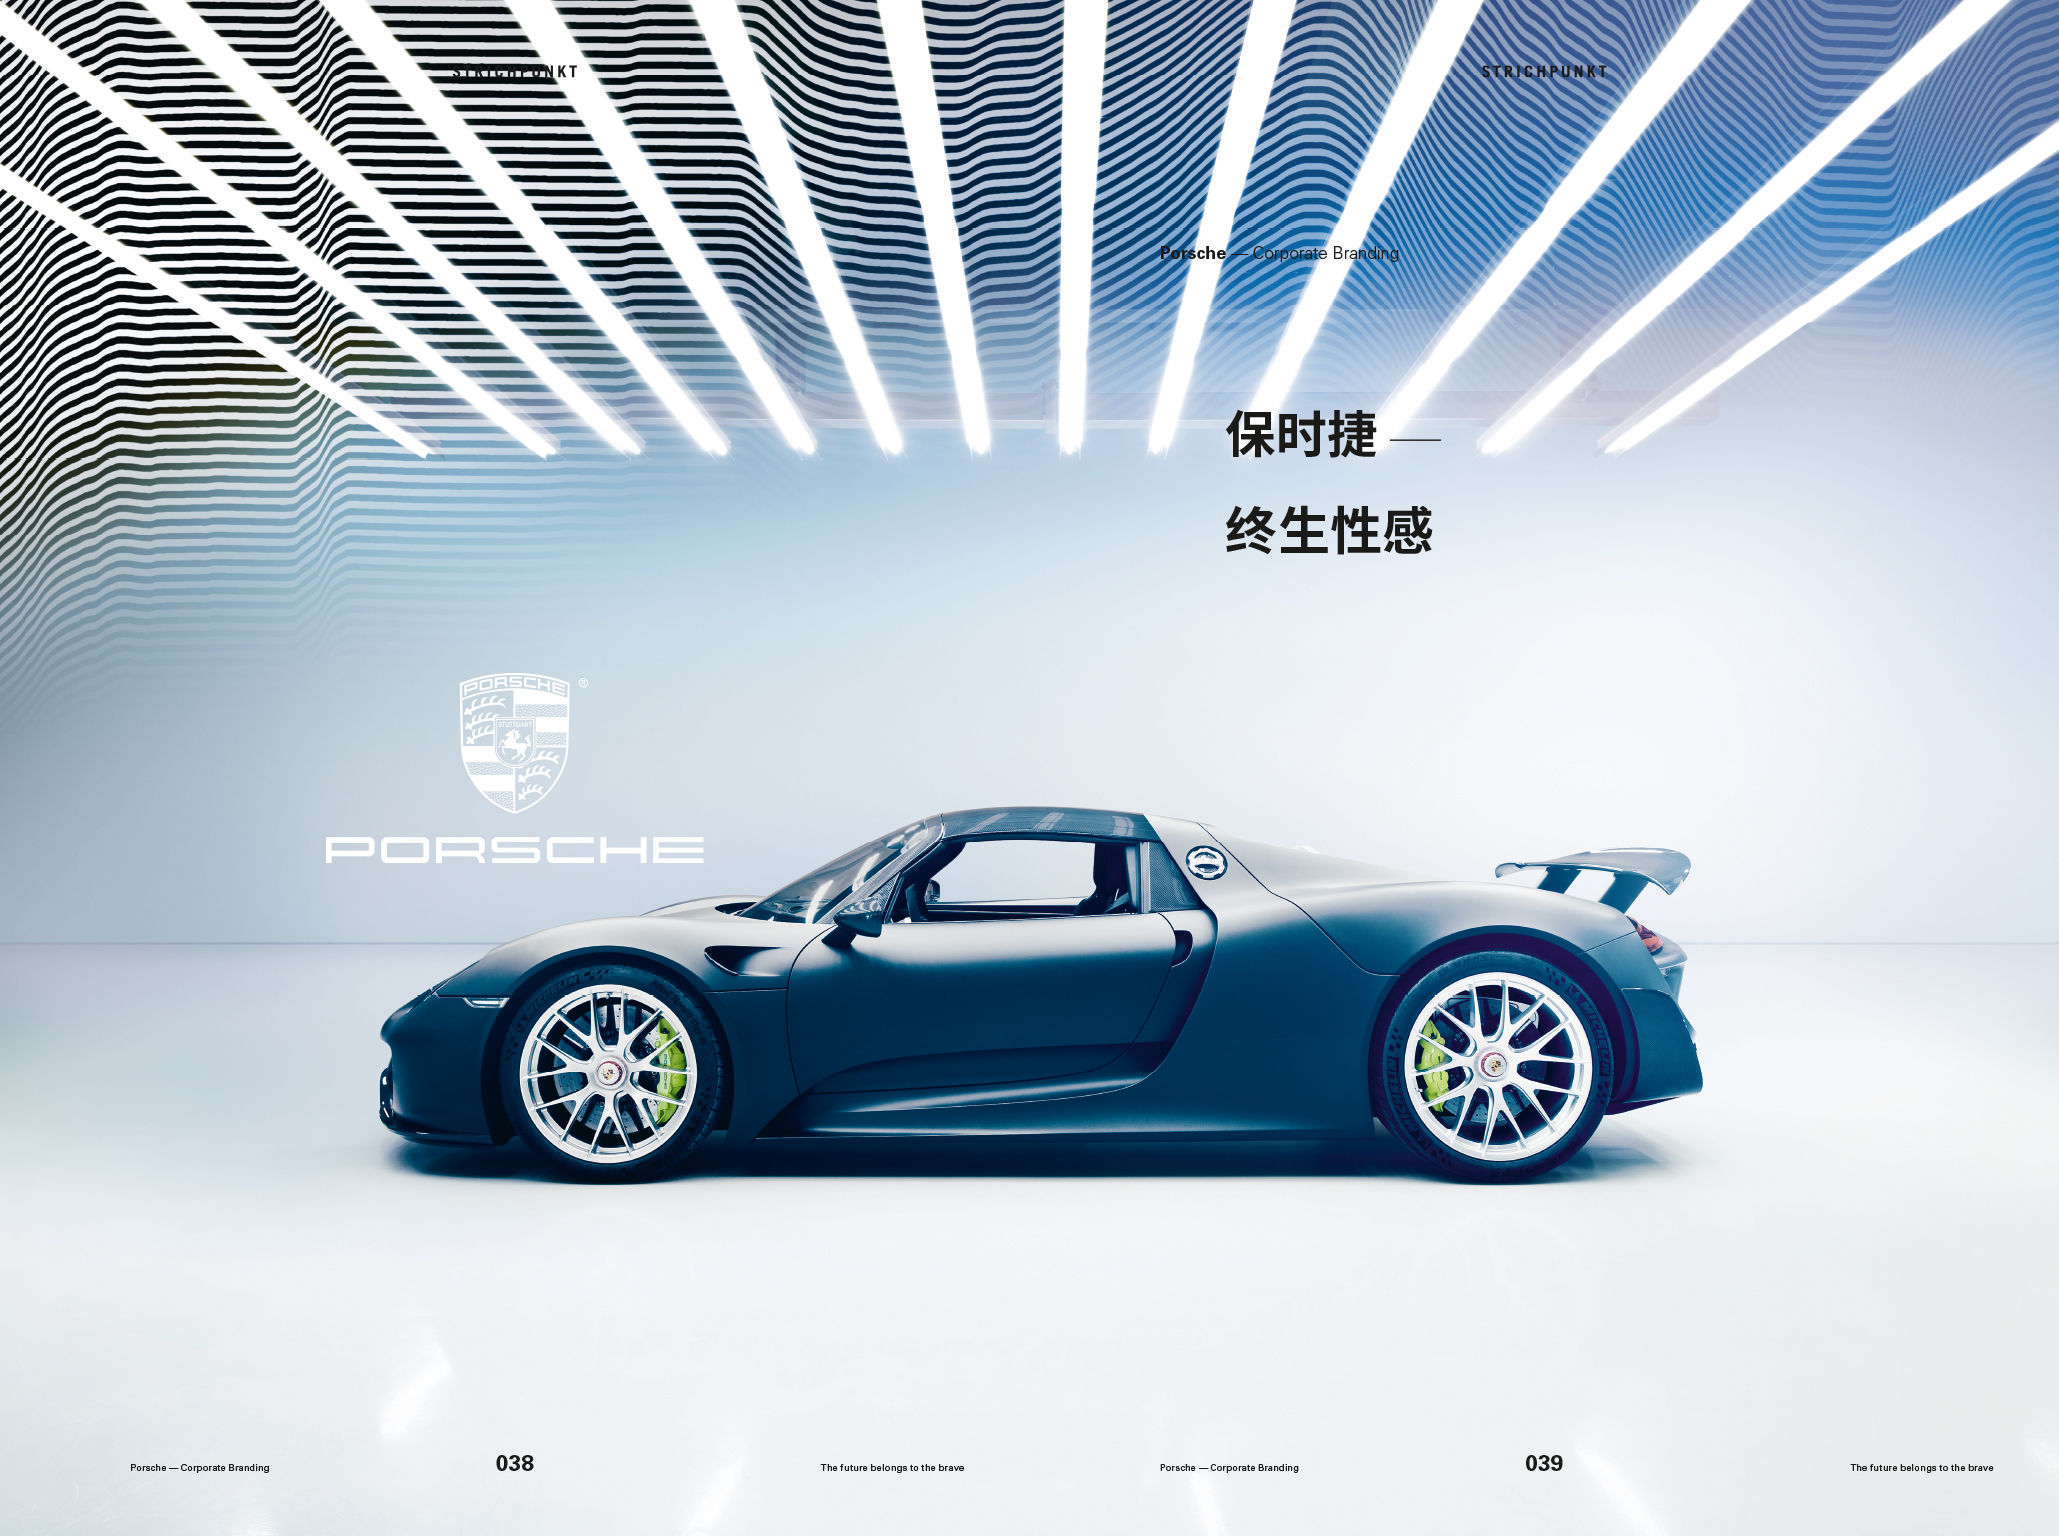 Strichpunkt Magazine - Hello China